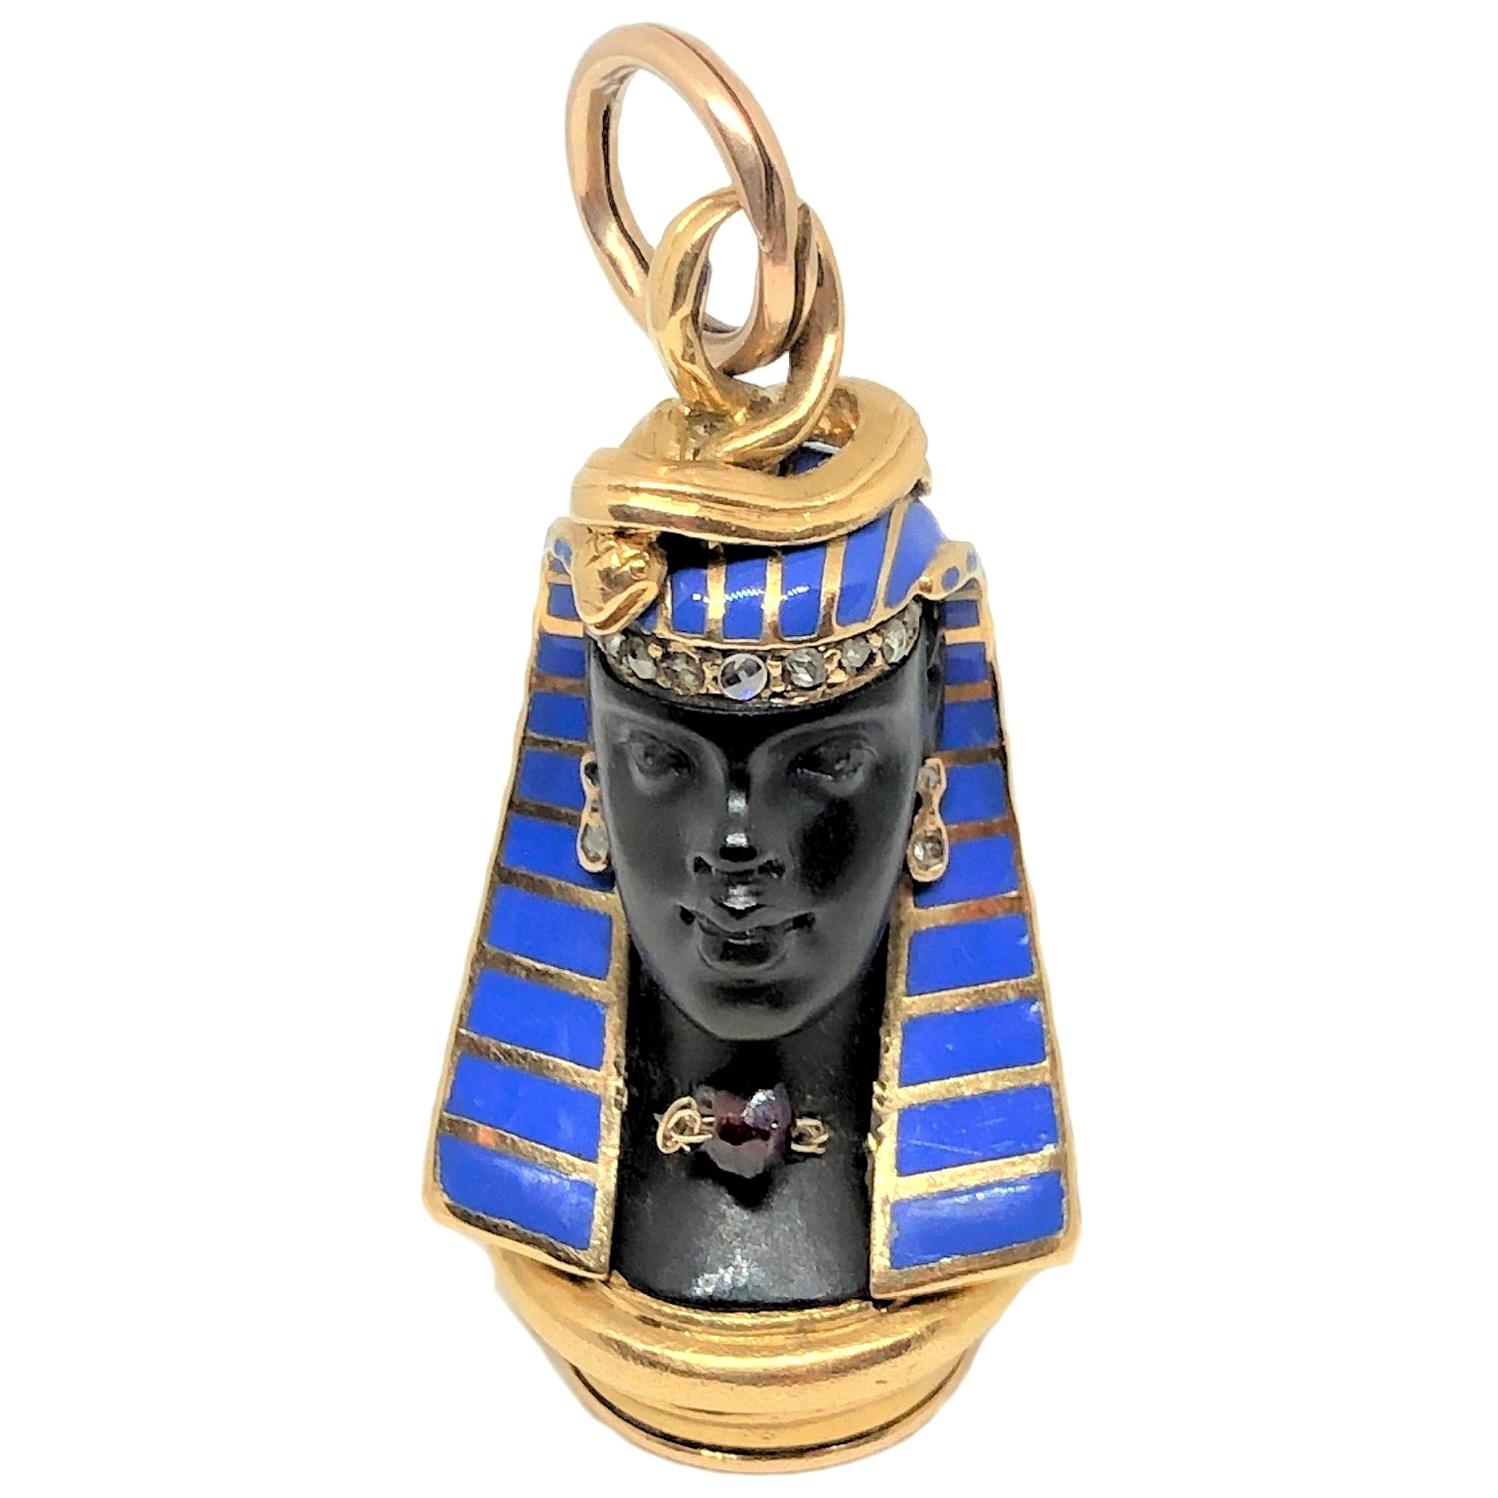 Antique Egyptian Revival Gold Enamel and Gem Set Seal Fob